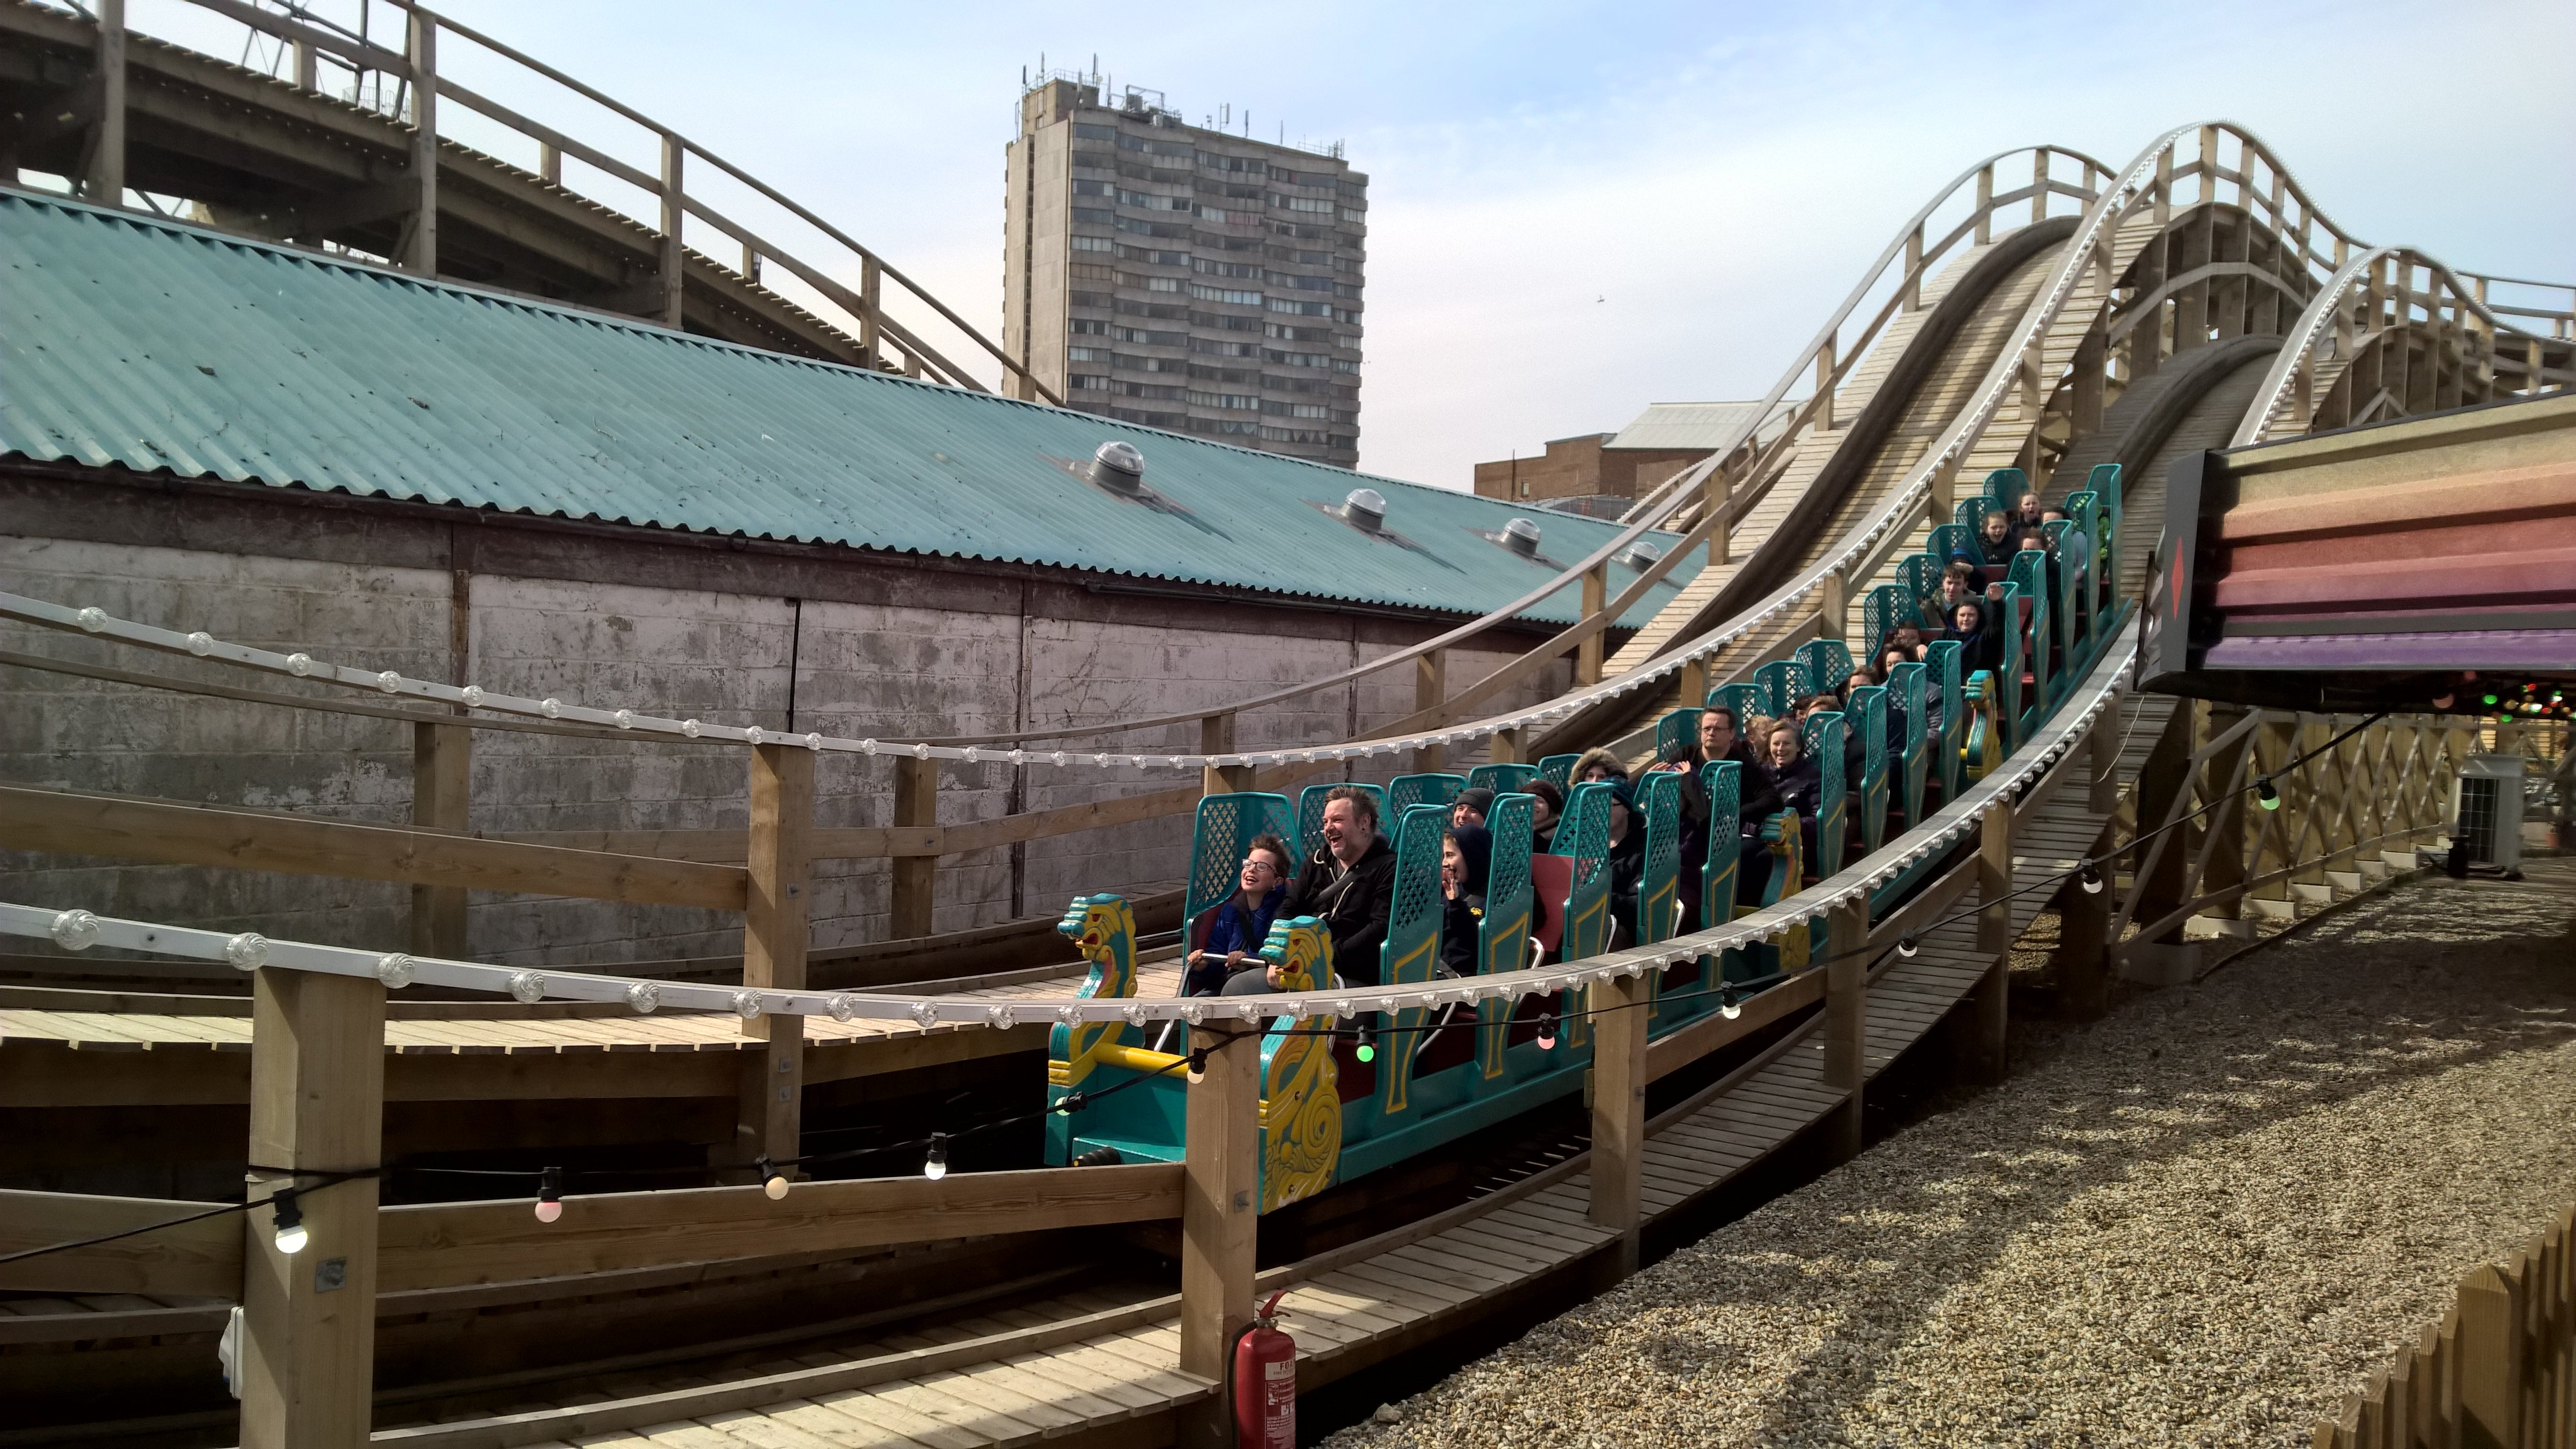 Dreamland Margate’s scenic railway rollercoaster